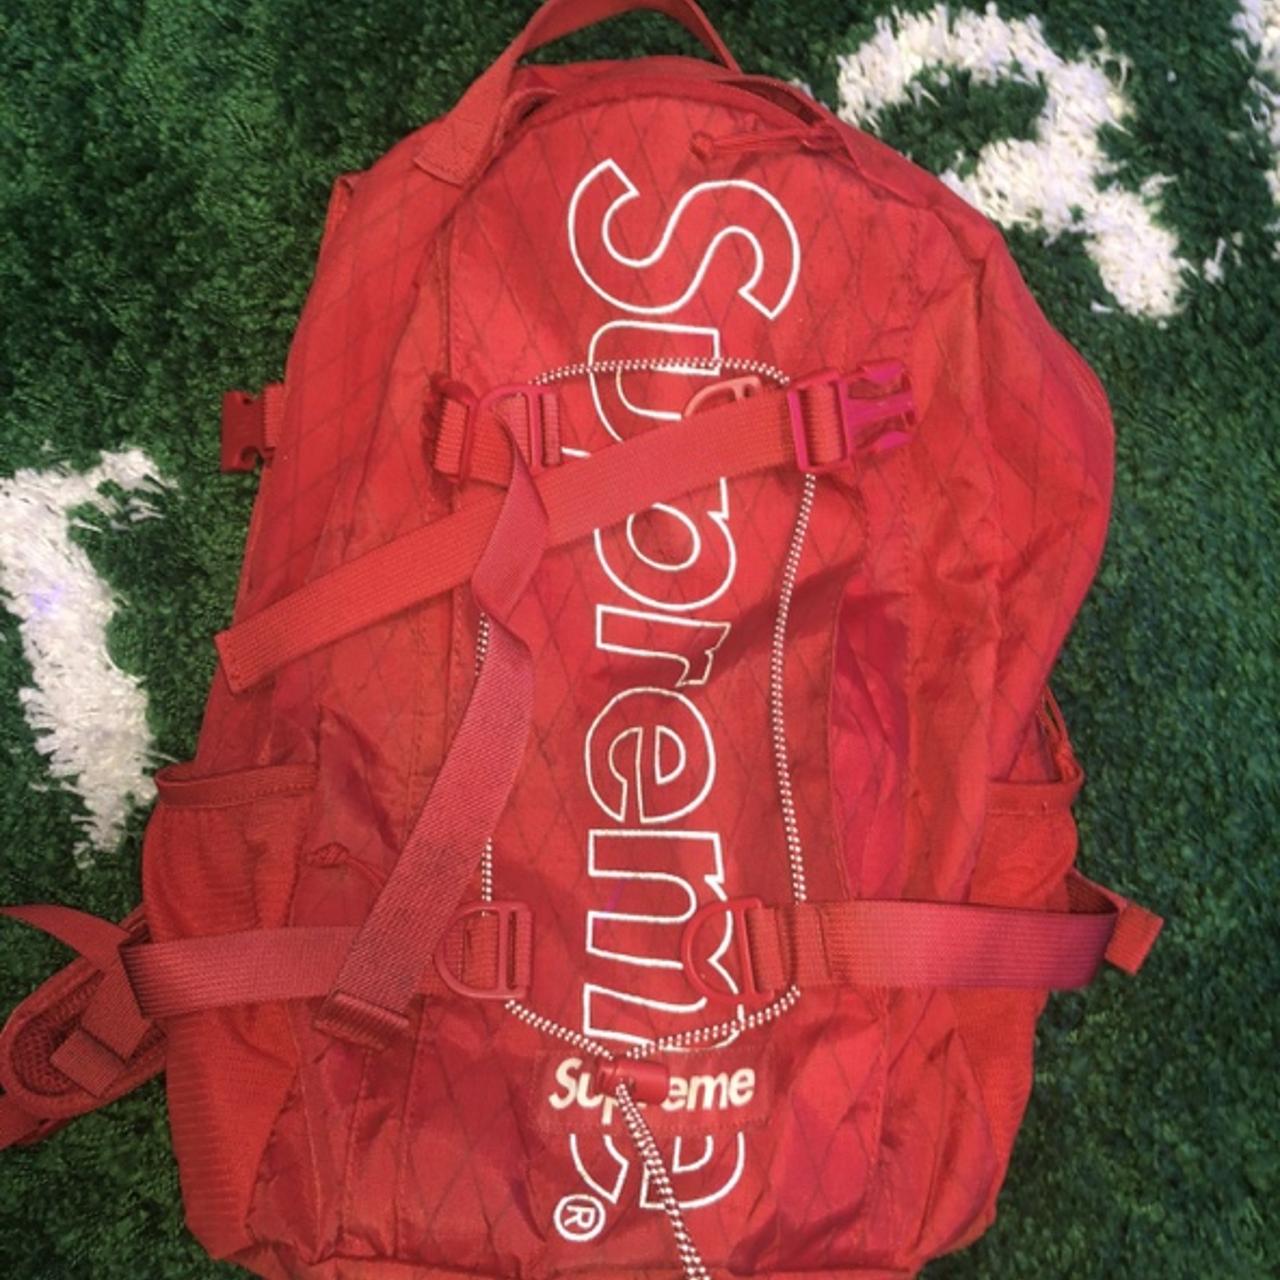 Supreme backpack from 2018 Fall season